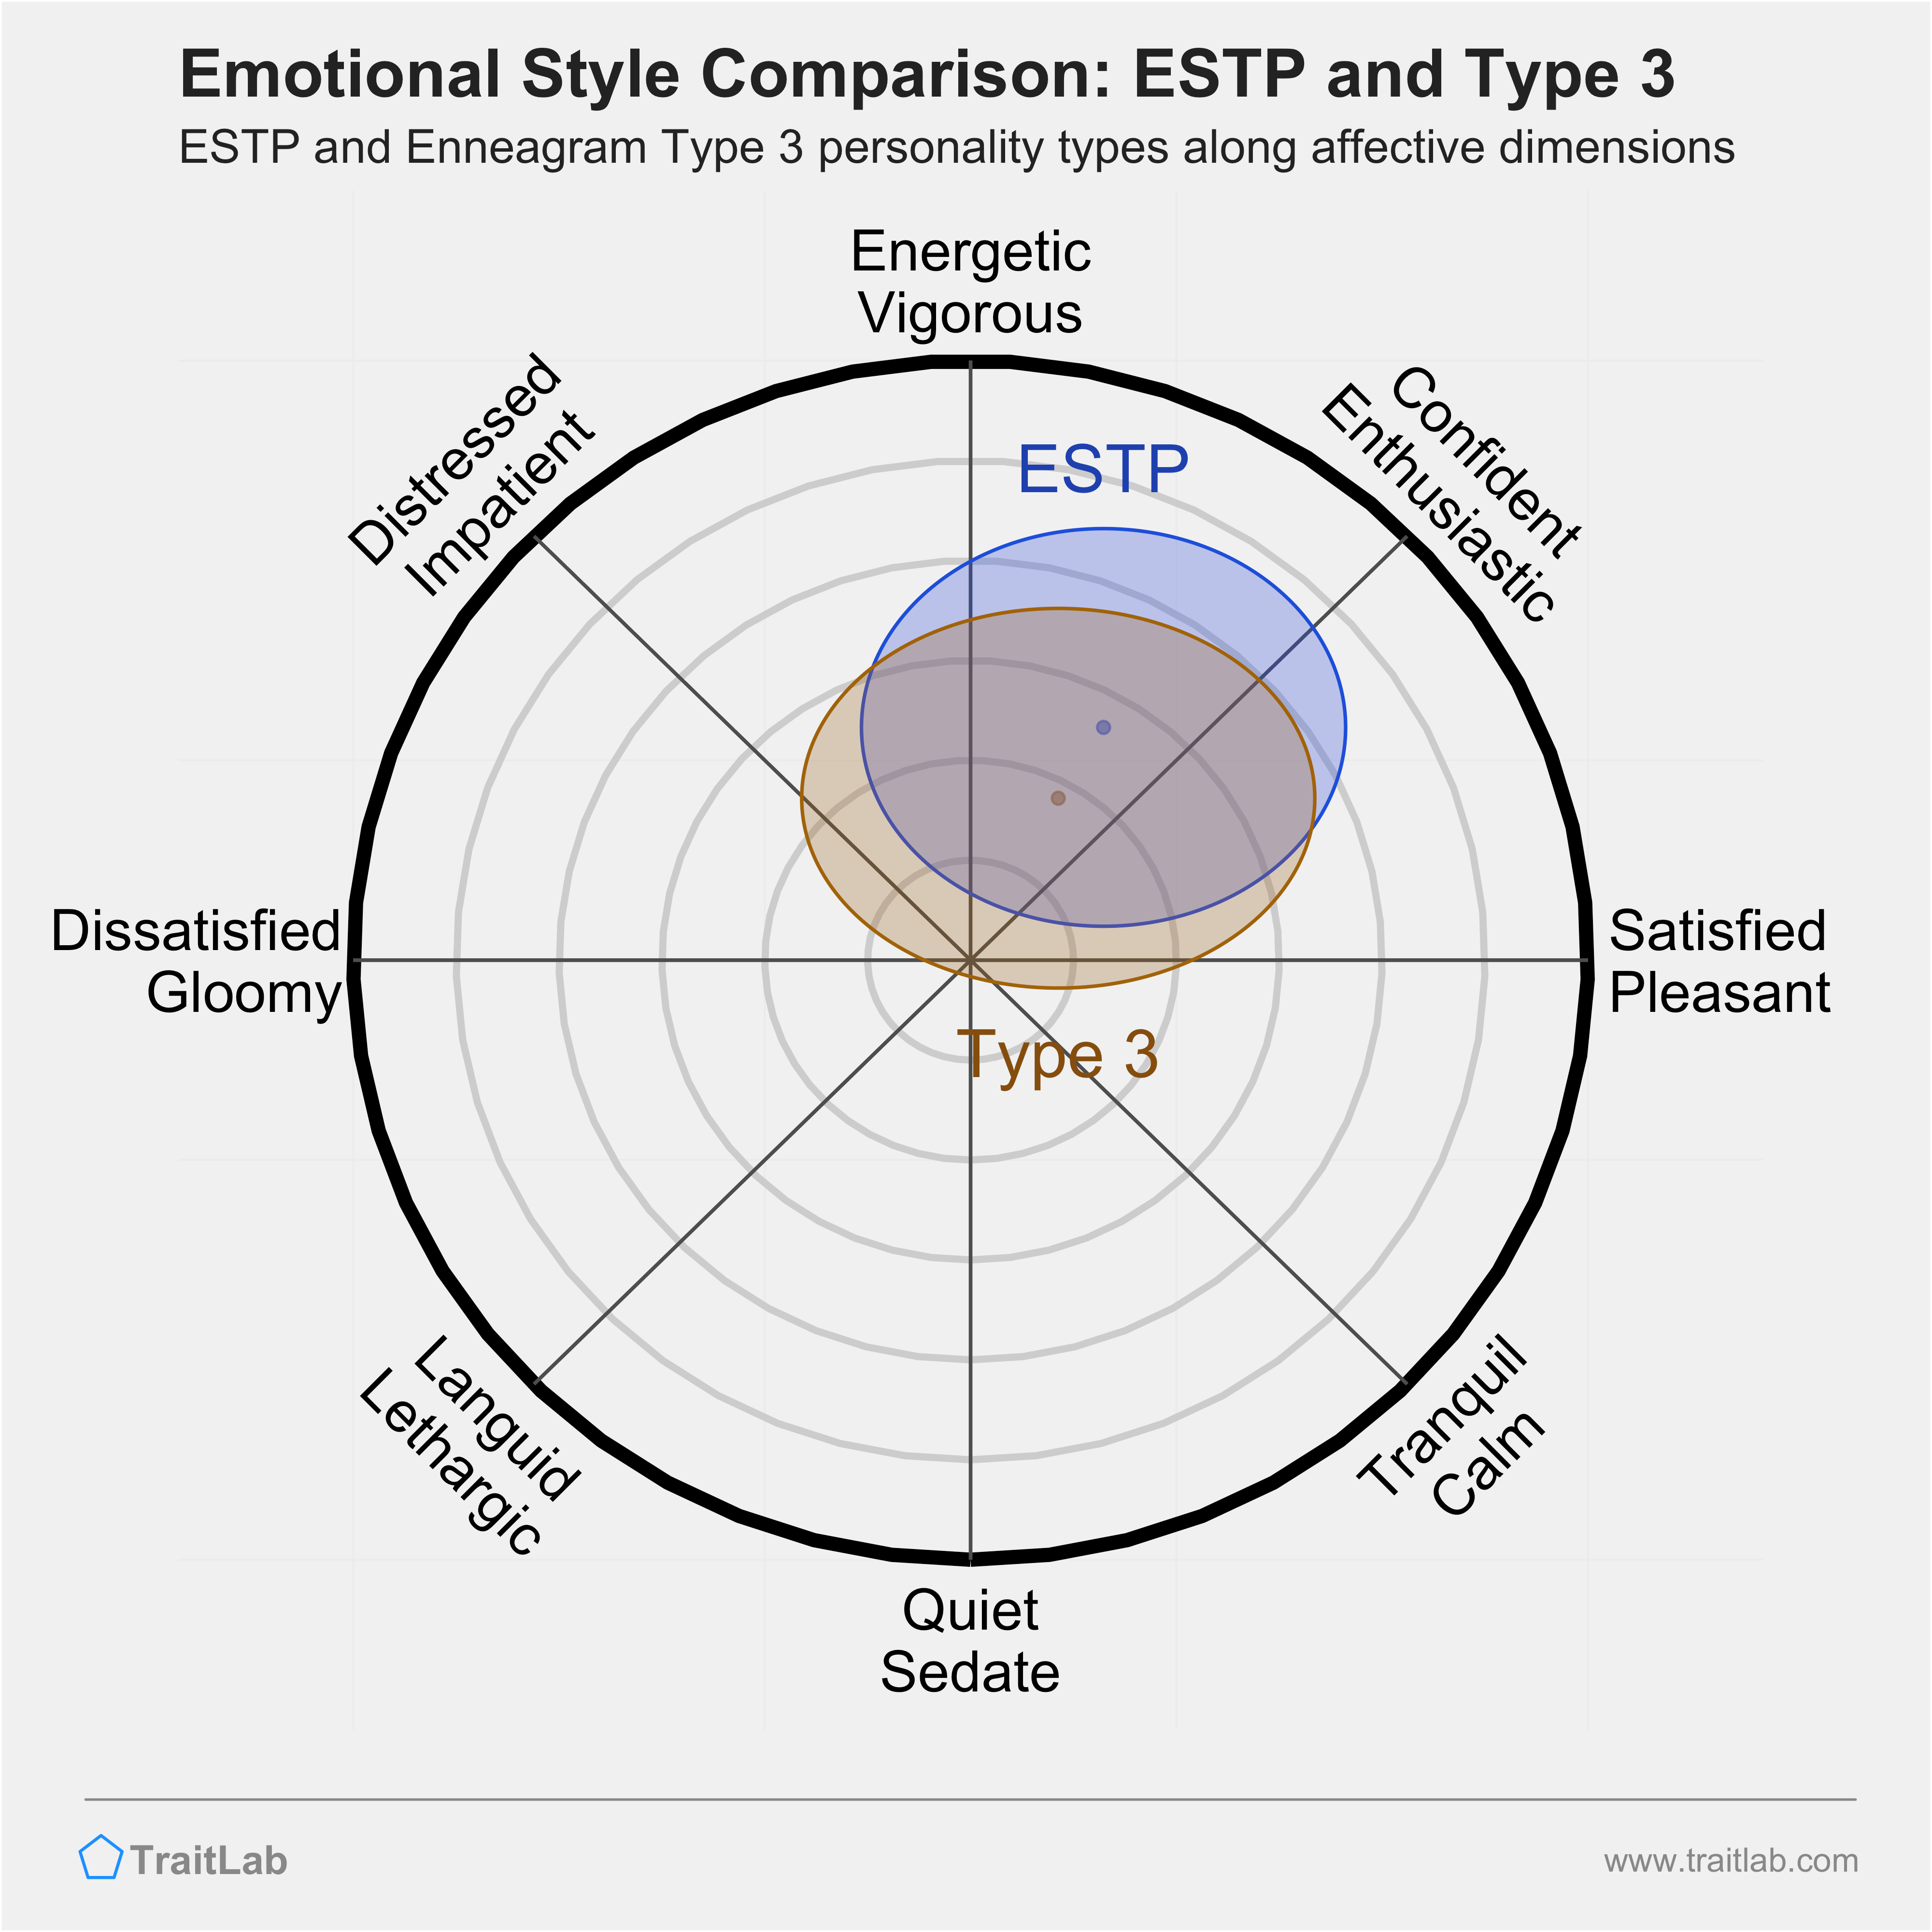 ESTP and Type 3 comparison across emotional (affective) dimensions